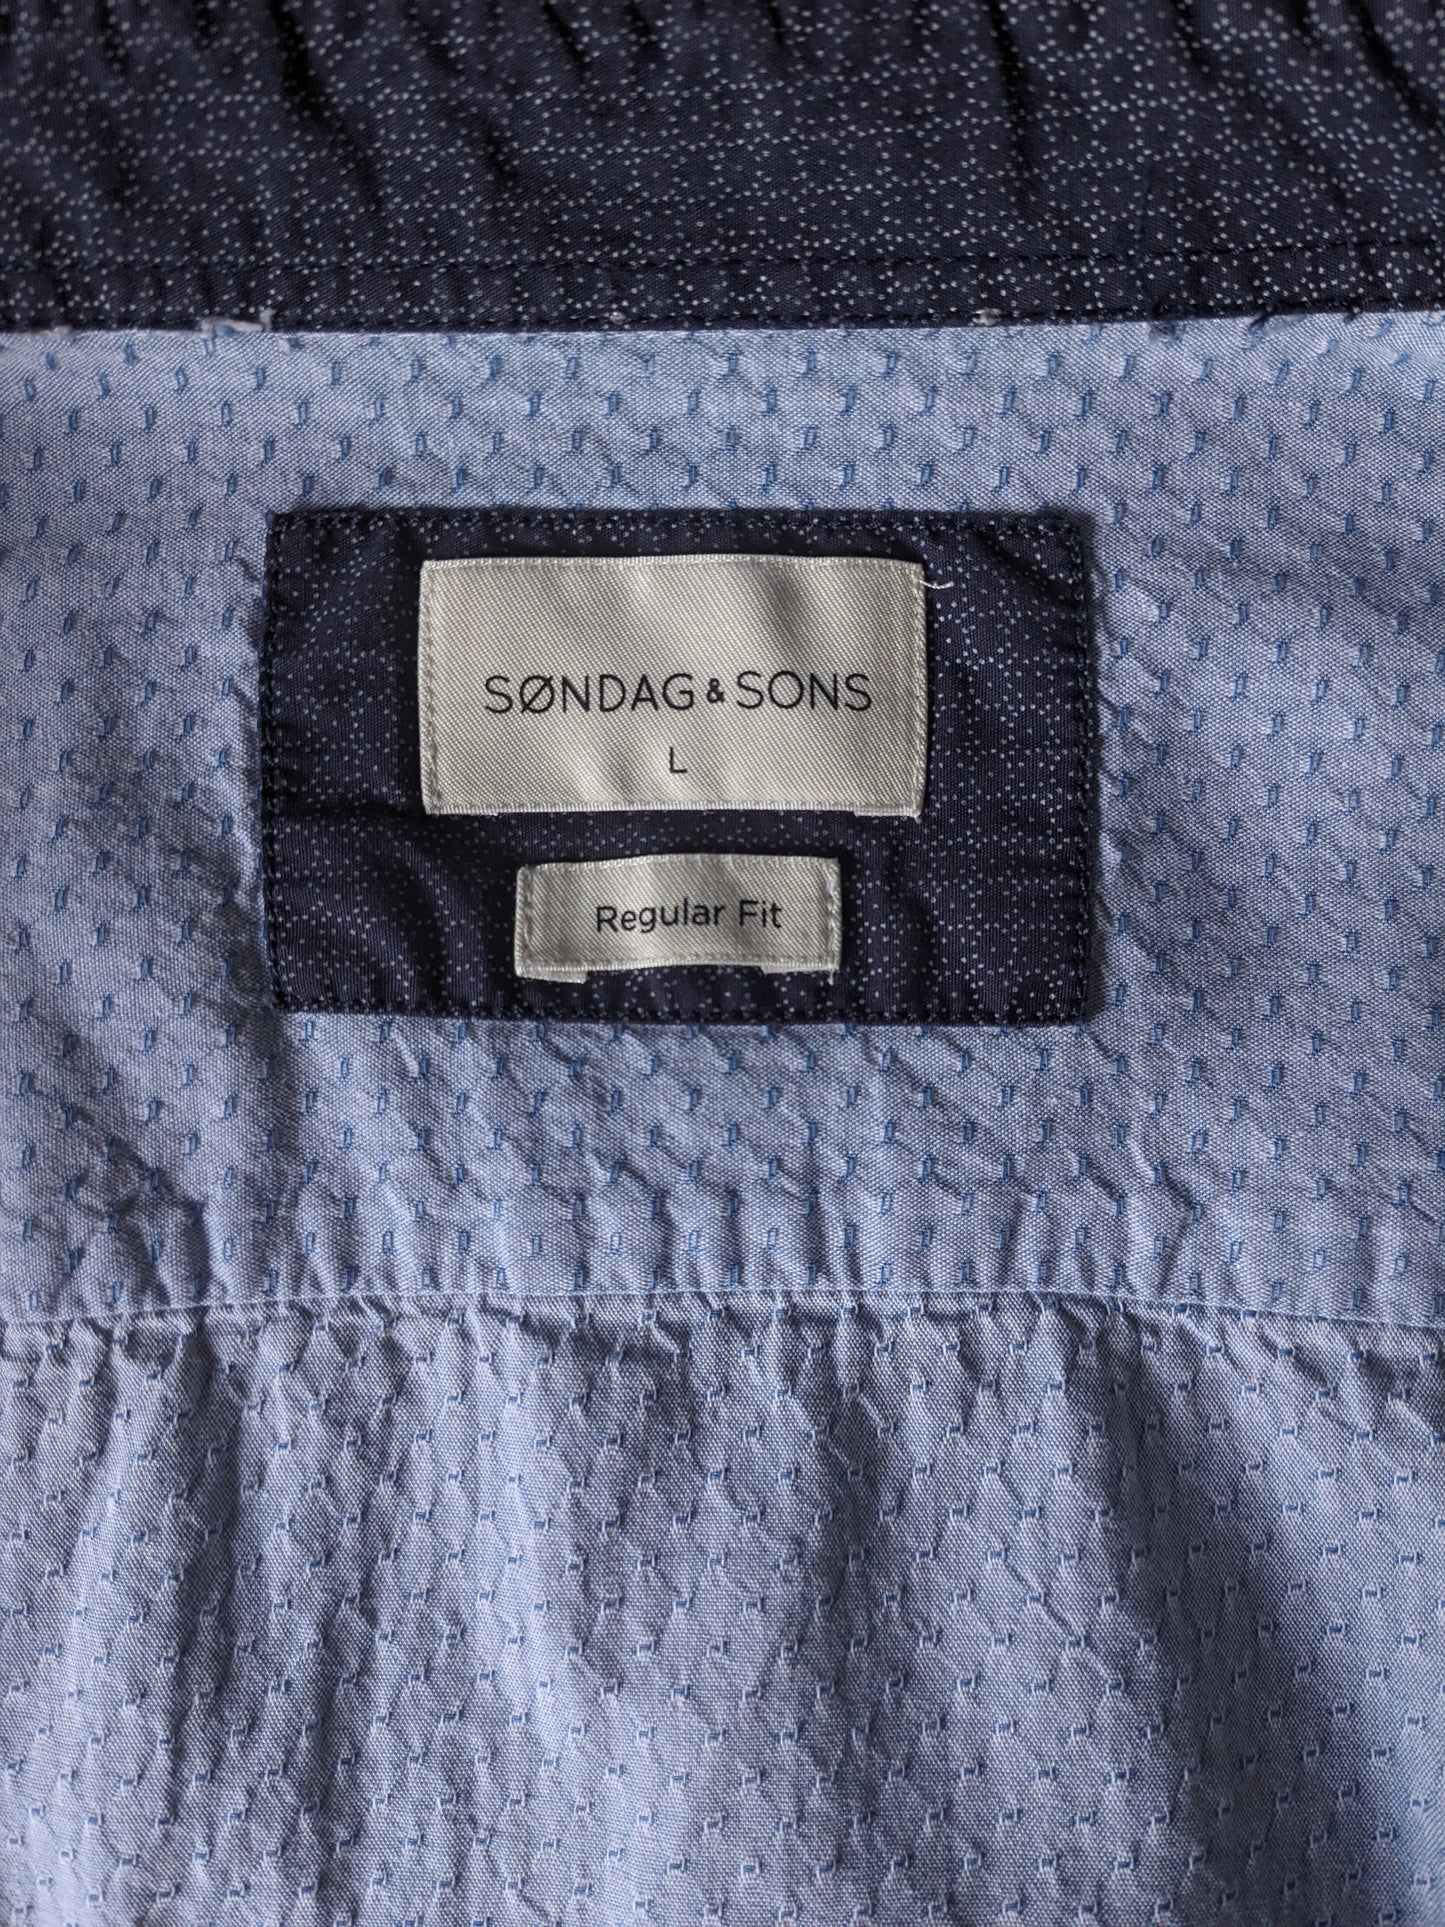 Sondag & Sons overhemd. Licht Blauw motief. Maat L. Regular Fit.